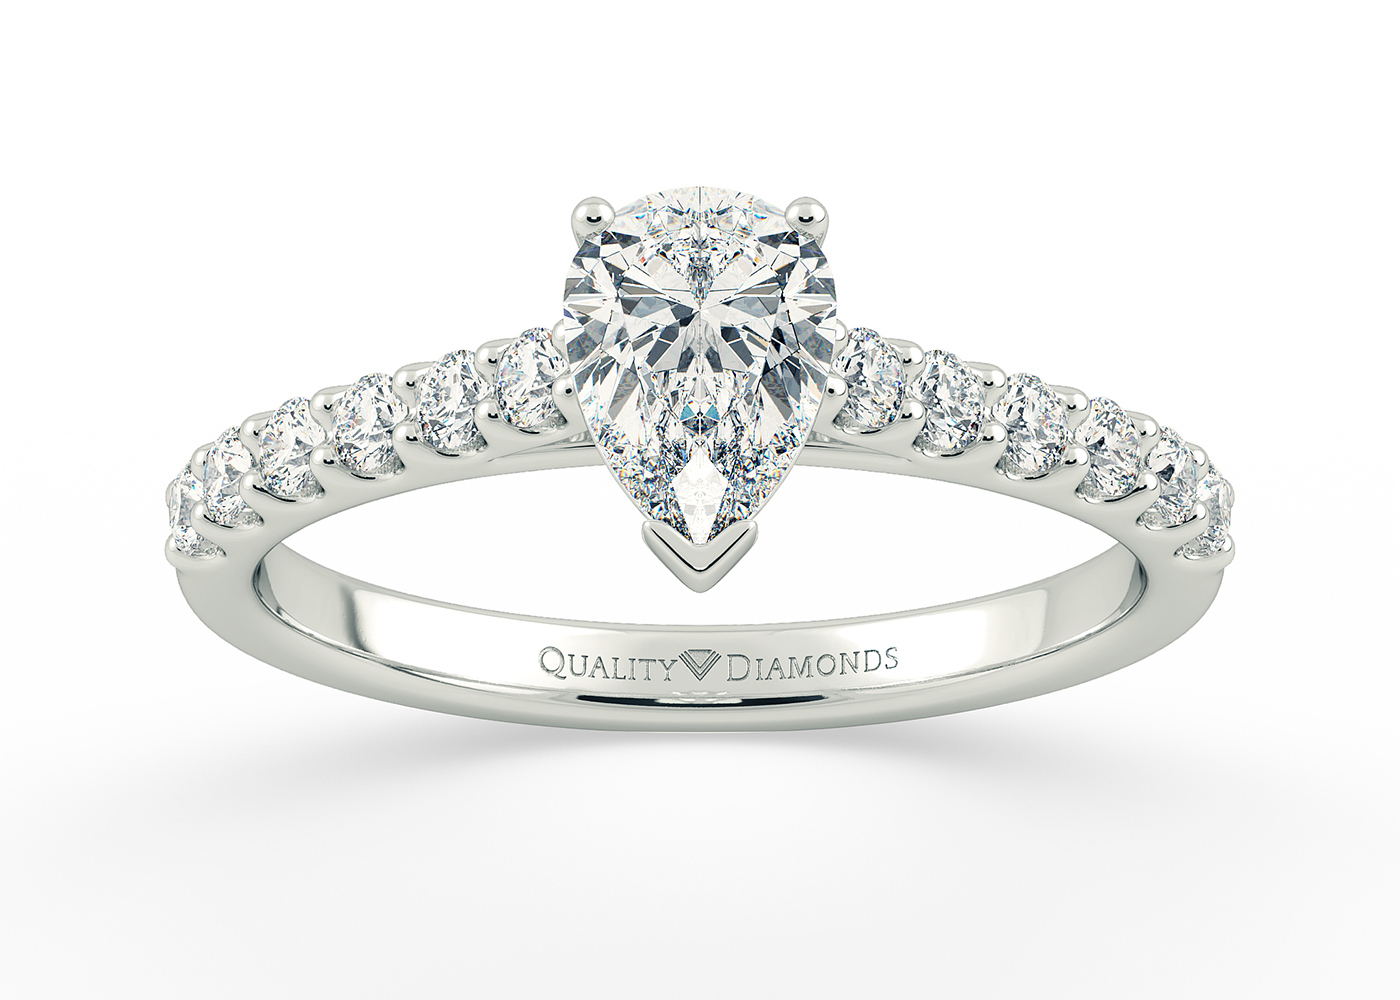 One Carat Pear Diamond Set Diamond Engagement Ring in Platinum 950